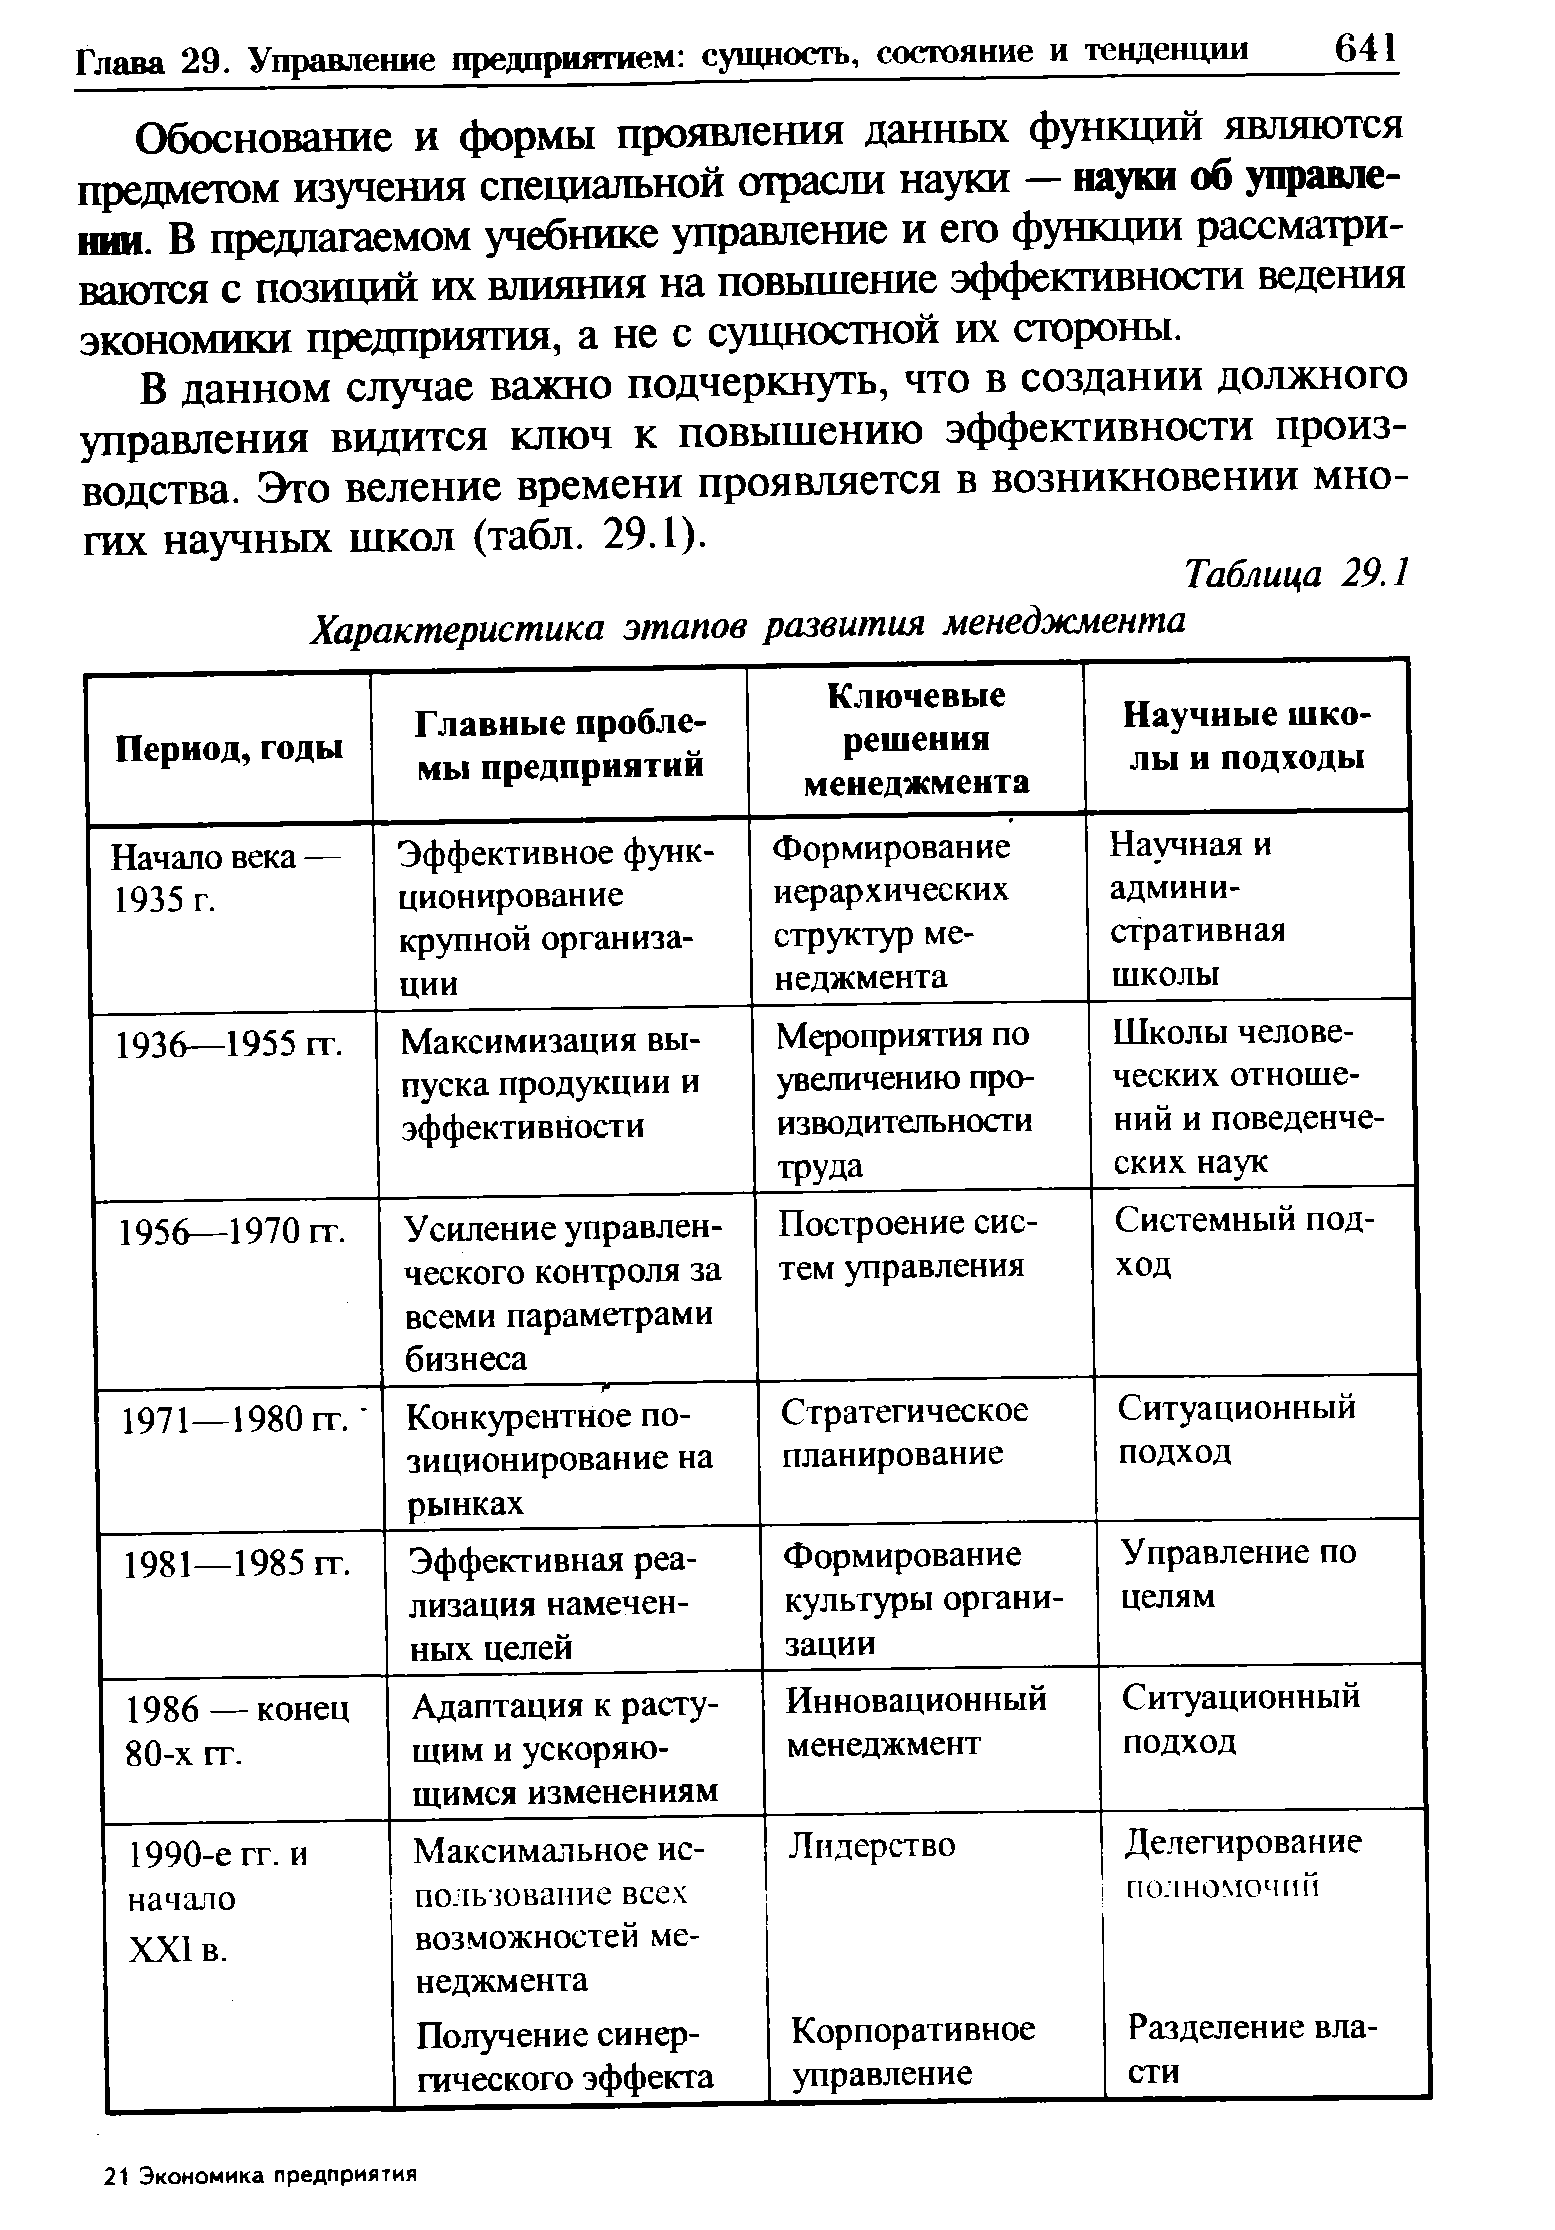 Таблица 29.1 Характеристика этапов развития менеджмента
